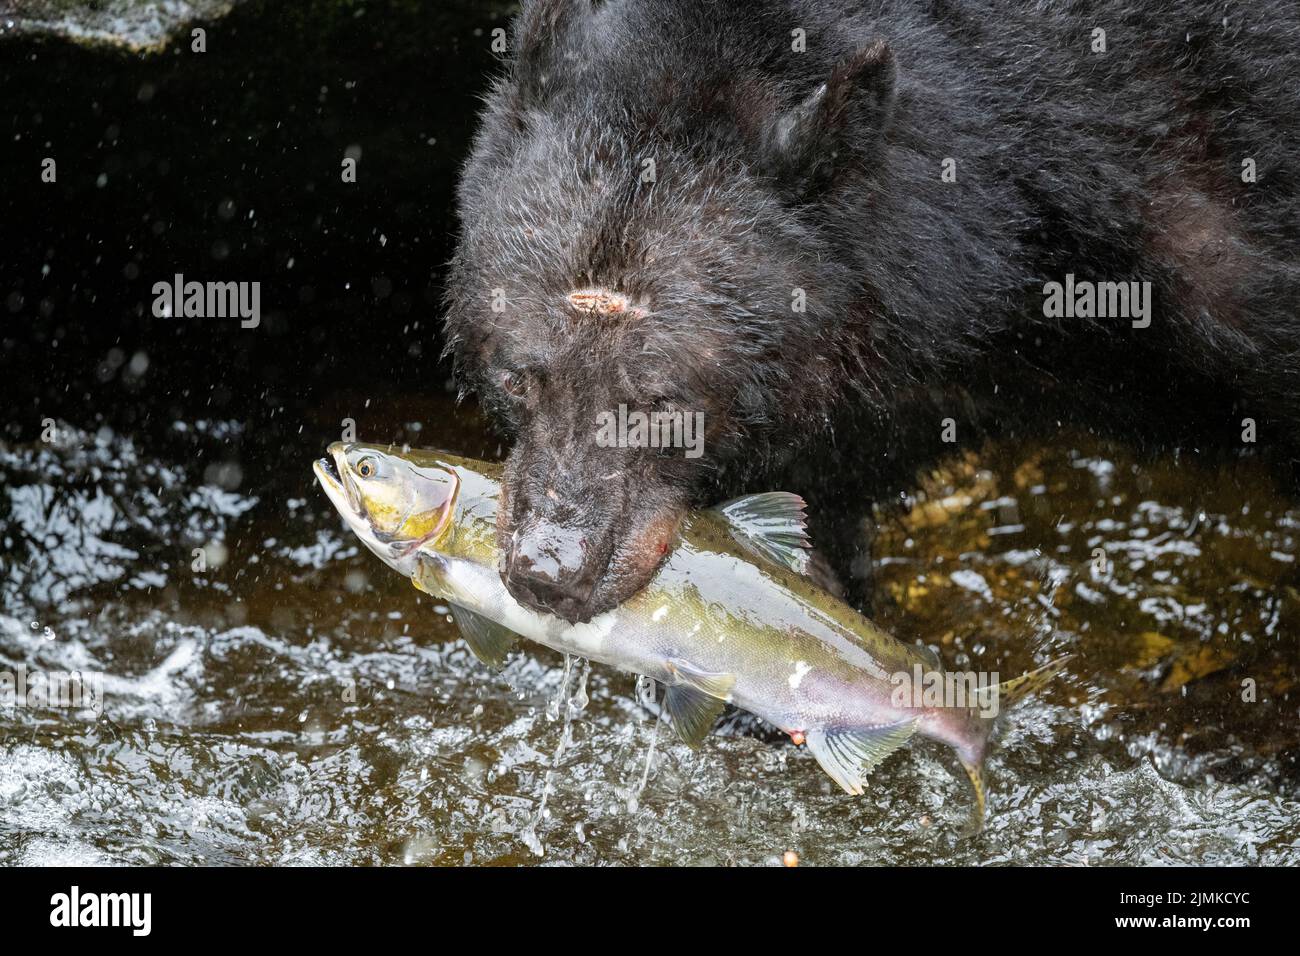 Alaska, Tongass National Forest, Anan Wildlife Refuge. American black bear (WILD: Ursus americanus) catching salmon in river. Stock Photo